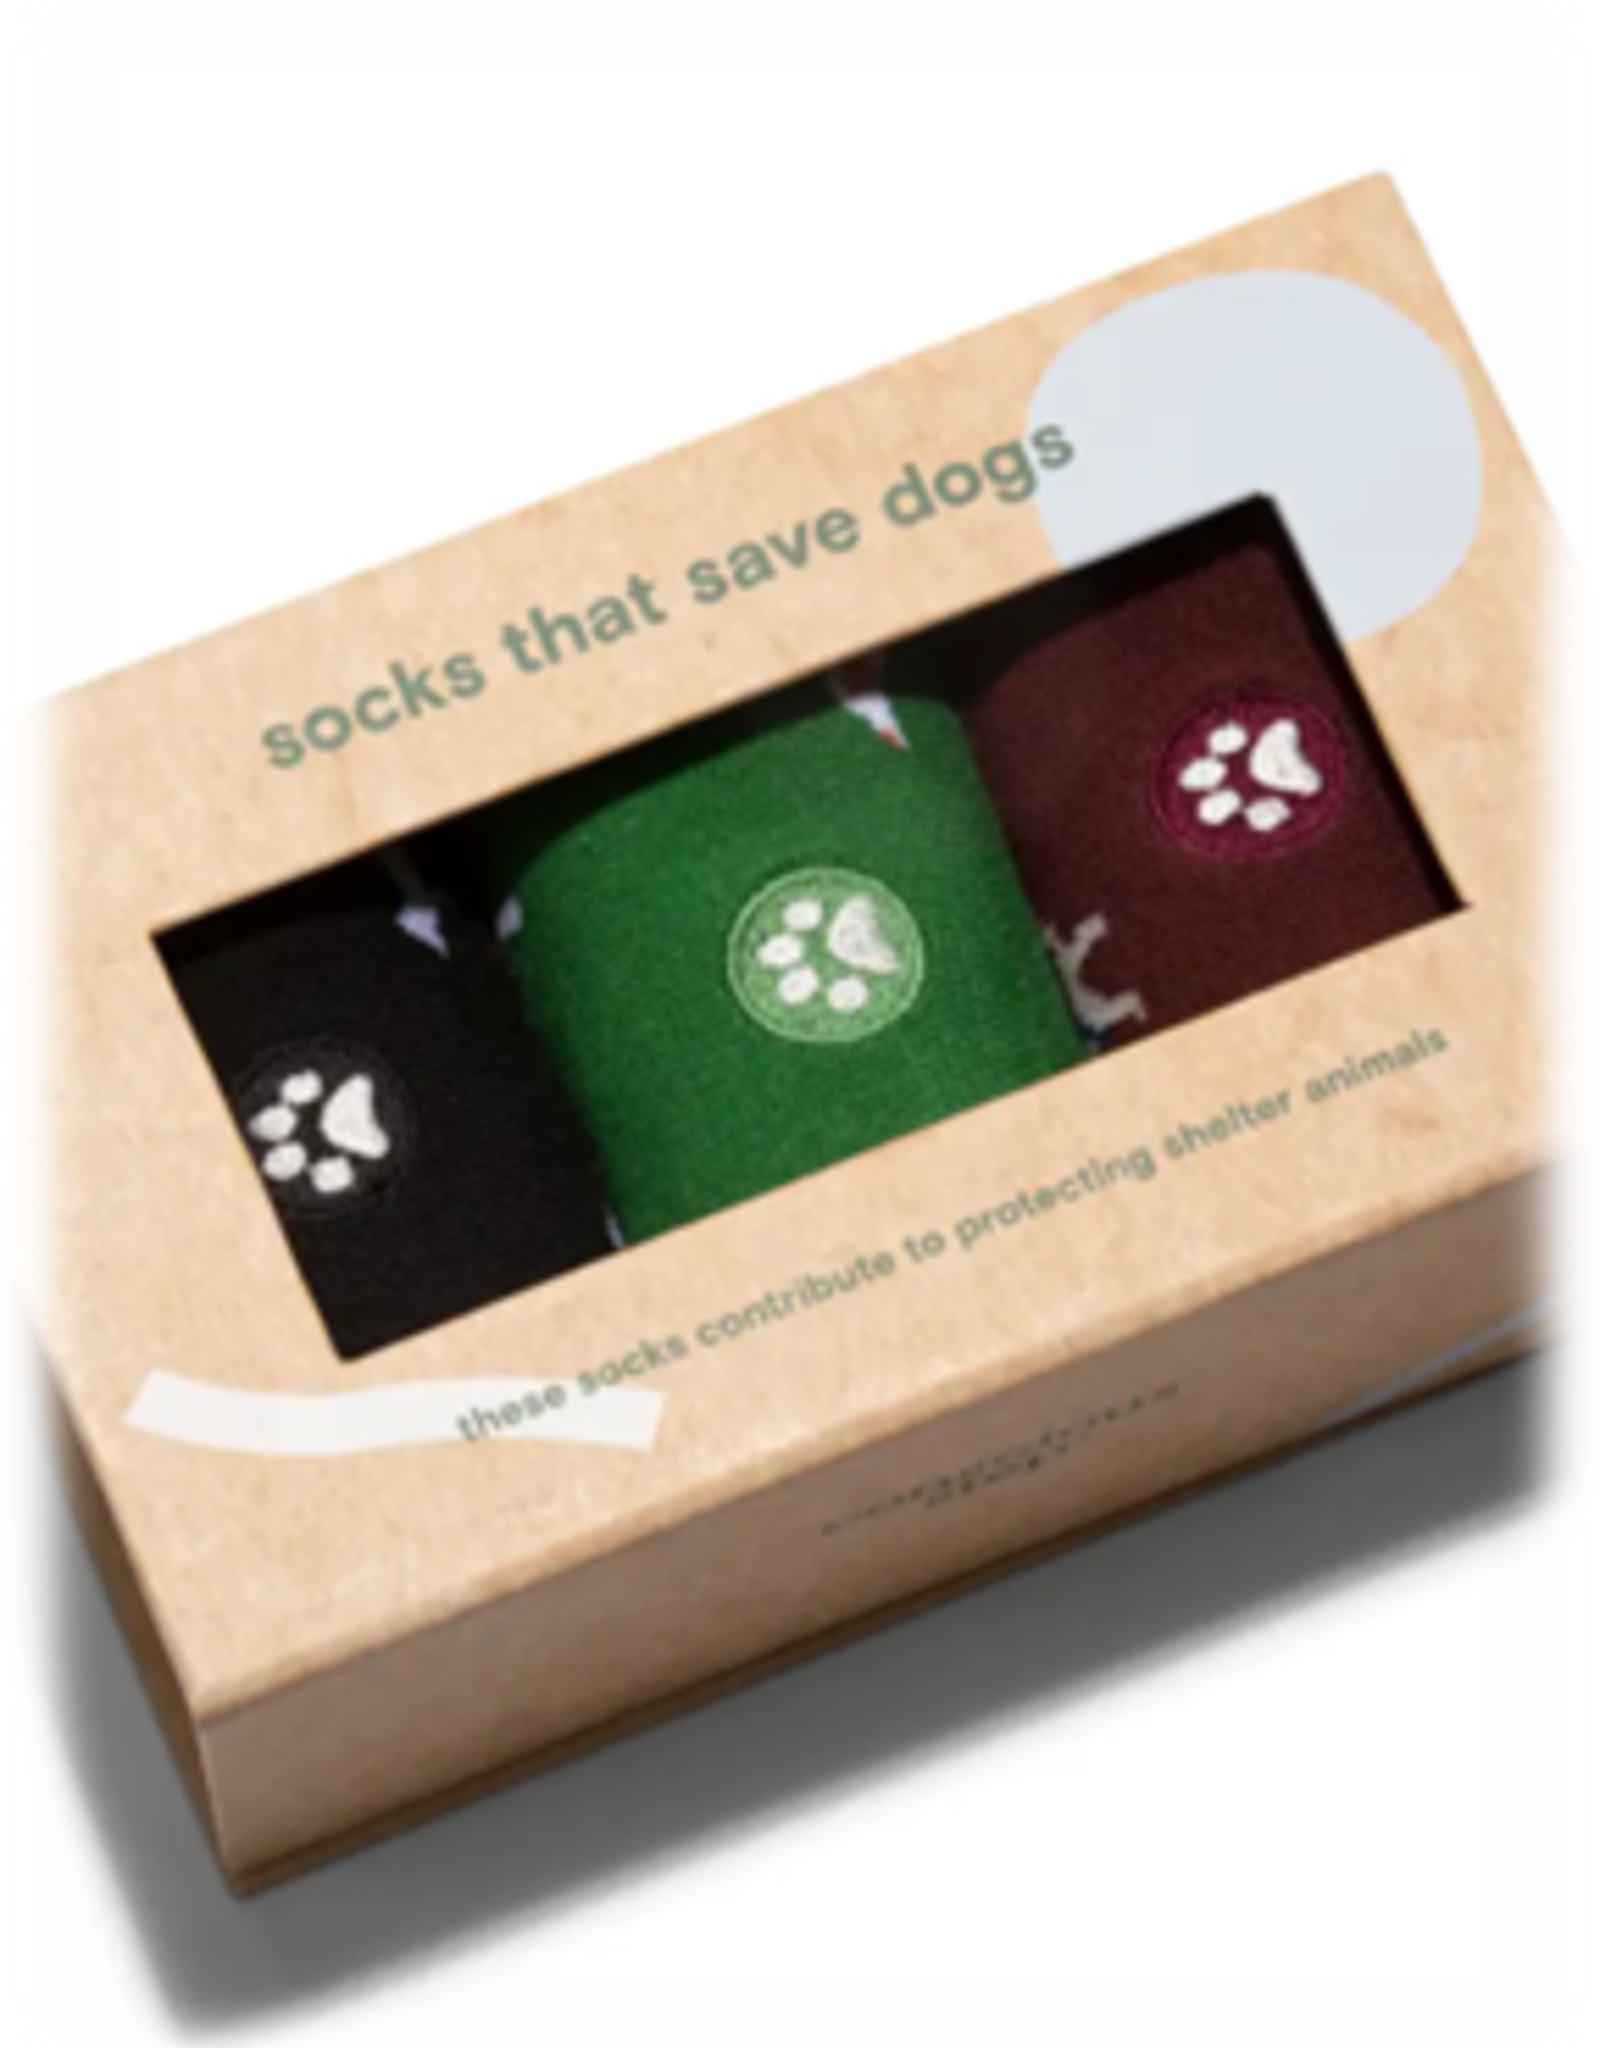 Boxed Set - Socks that Save Dogs Medium